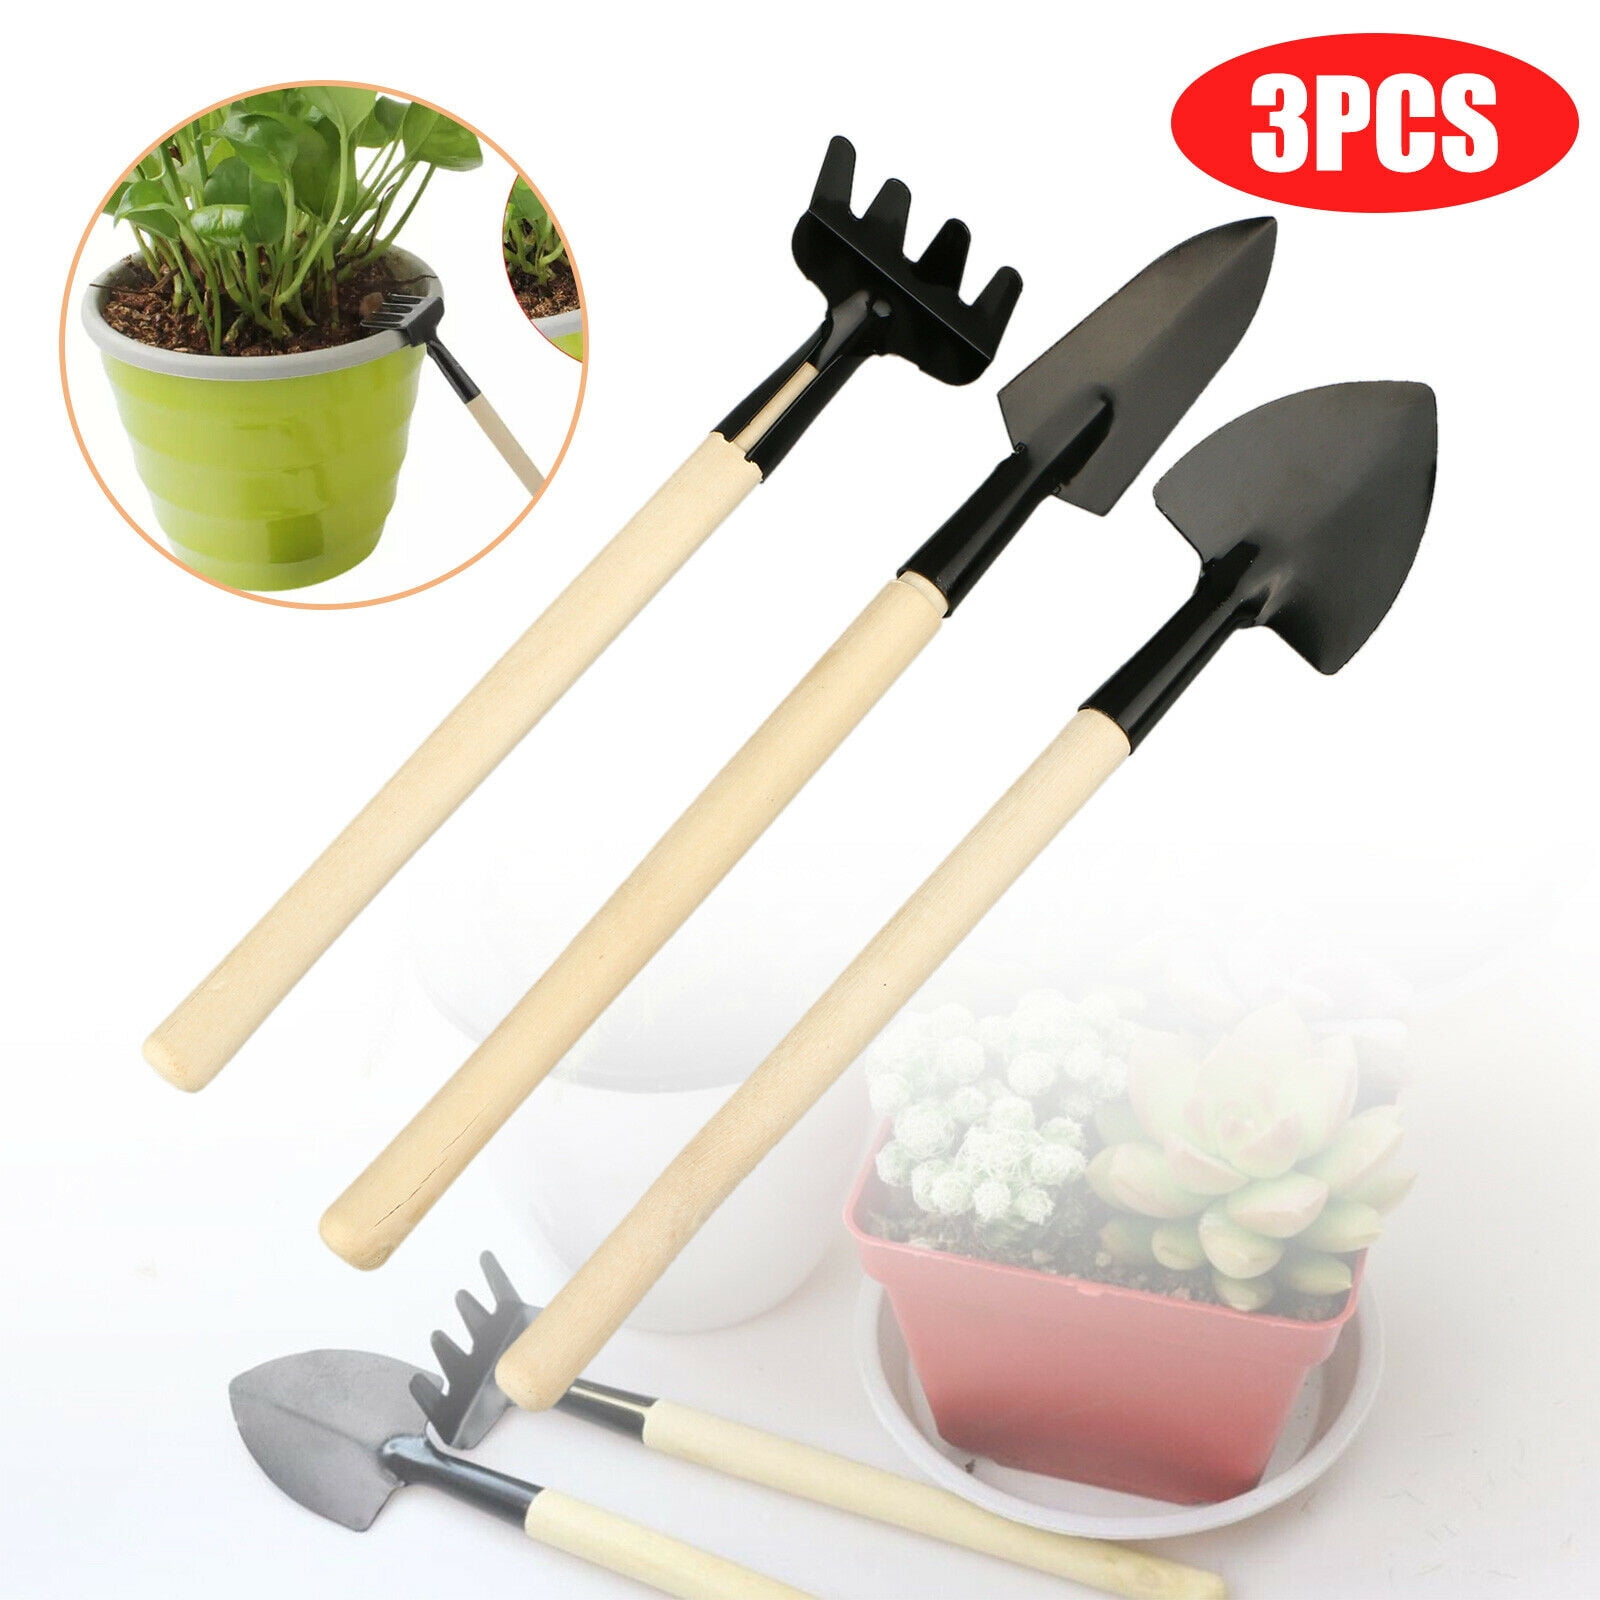 3Pcs/set Mini Wooden Handle Shovel Rake Spade Gardening Garden Plant Tools Set 